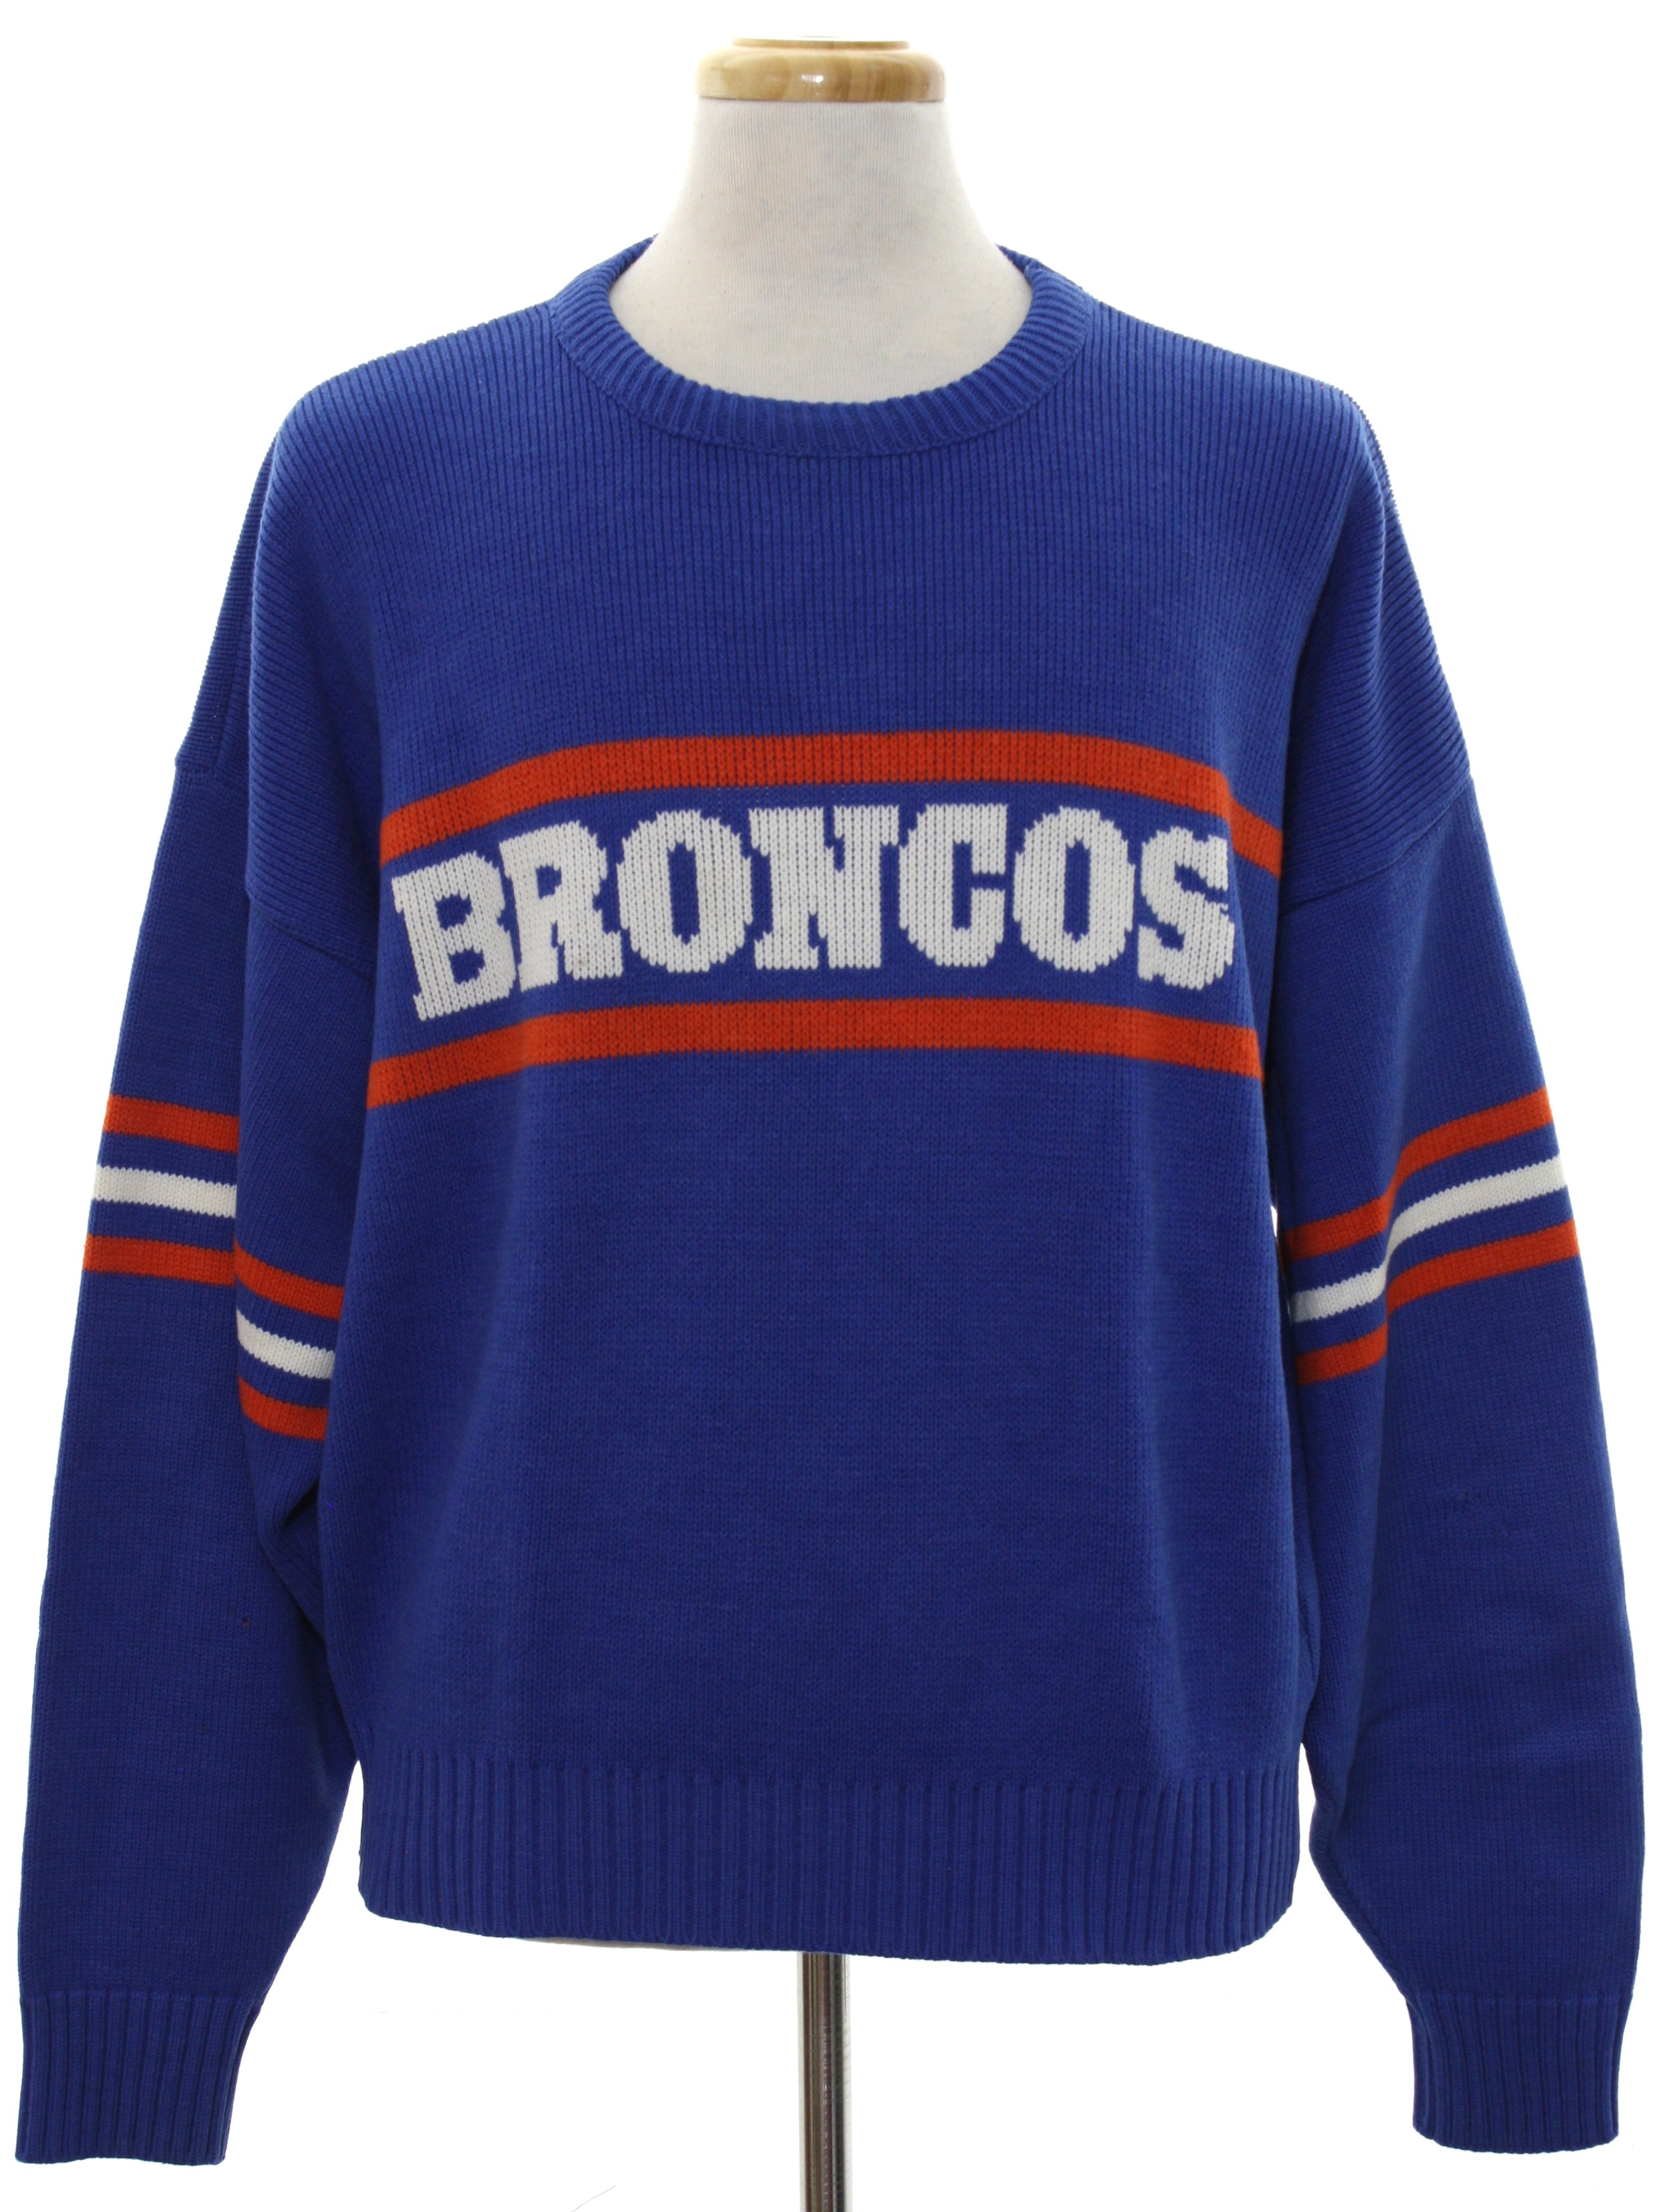 Vintage 1980's Sweater: 80s -Cliff Engle Ltd Official NFL Licensed ...